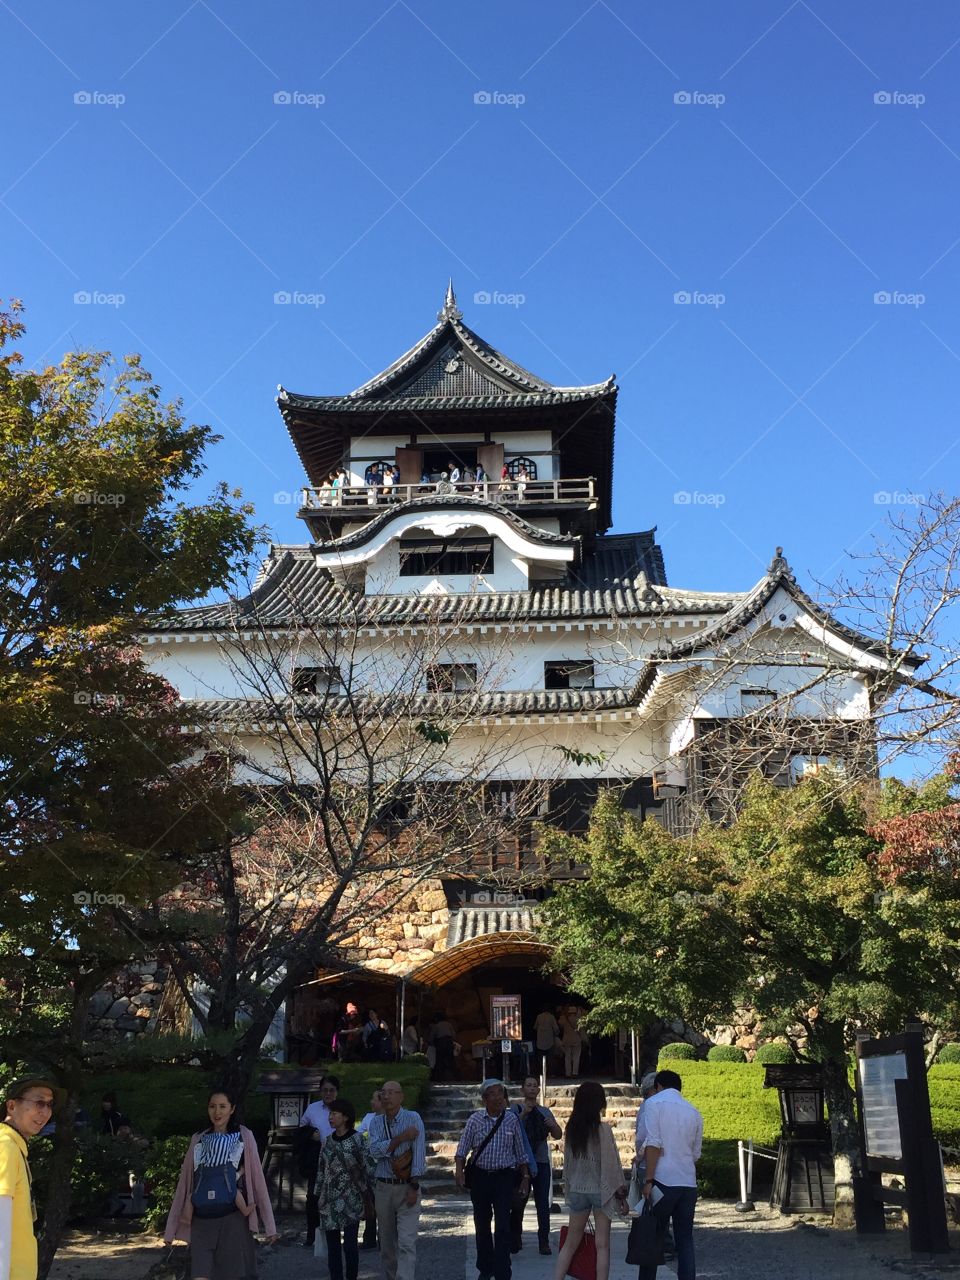 Inuyama Castle!